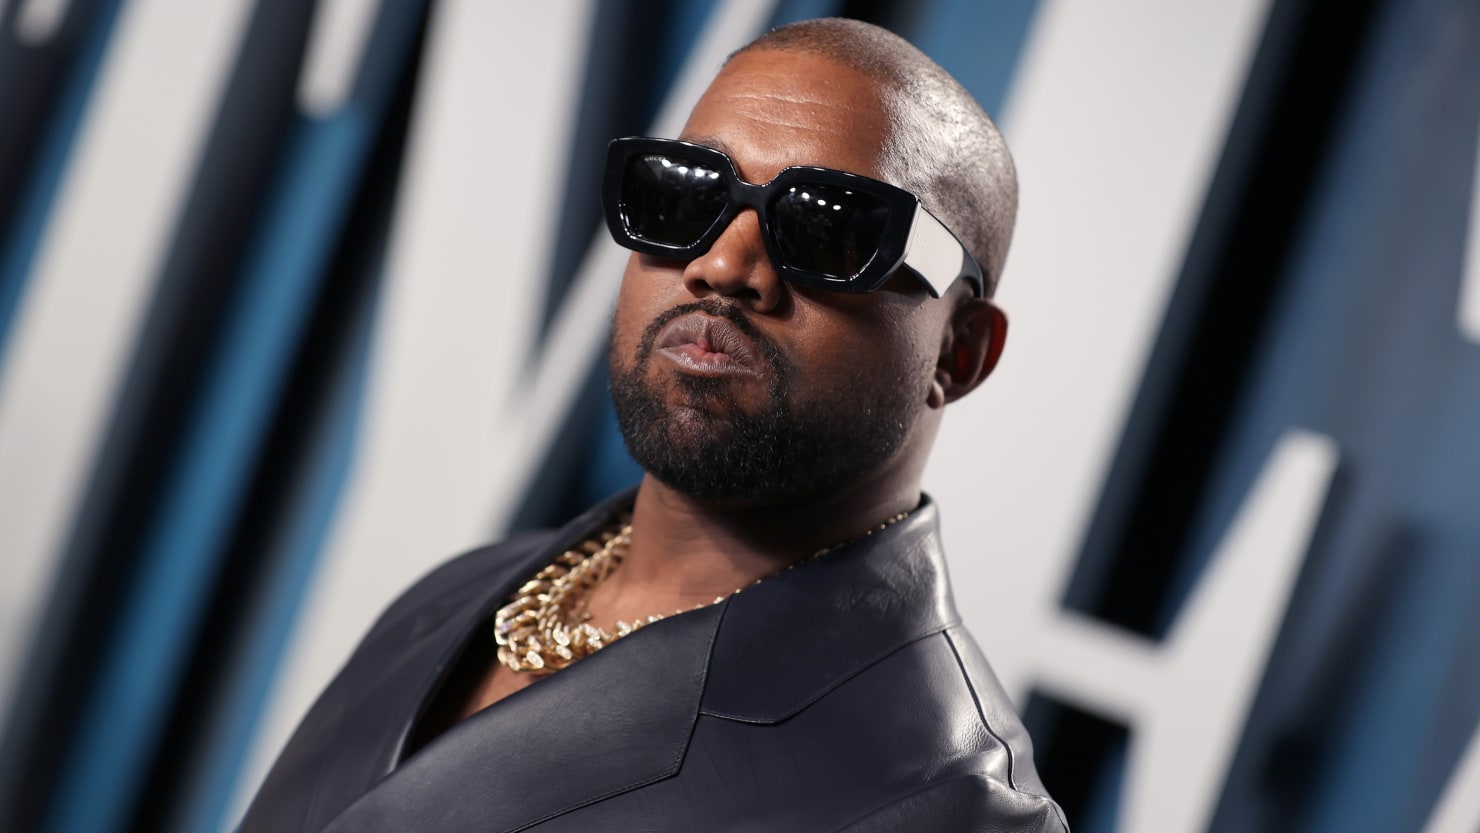 JPMorgan Chase ha tagliato i legami con Kanye West prima dei suoi tweet antisemiti